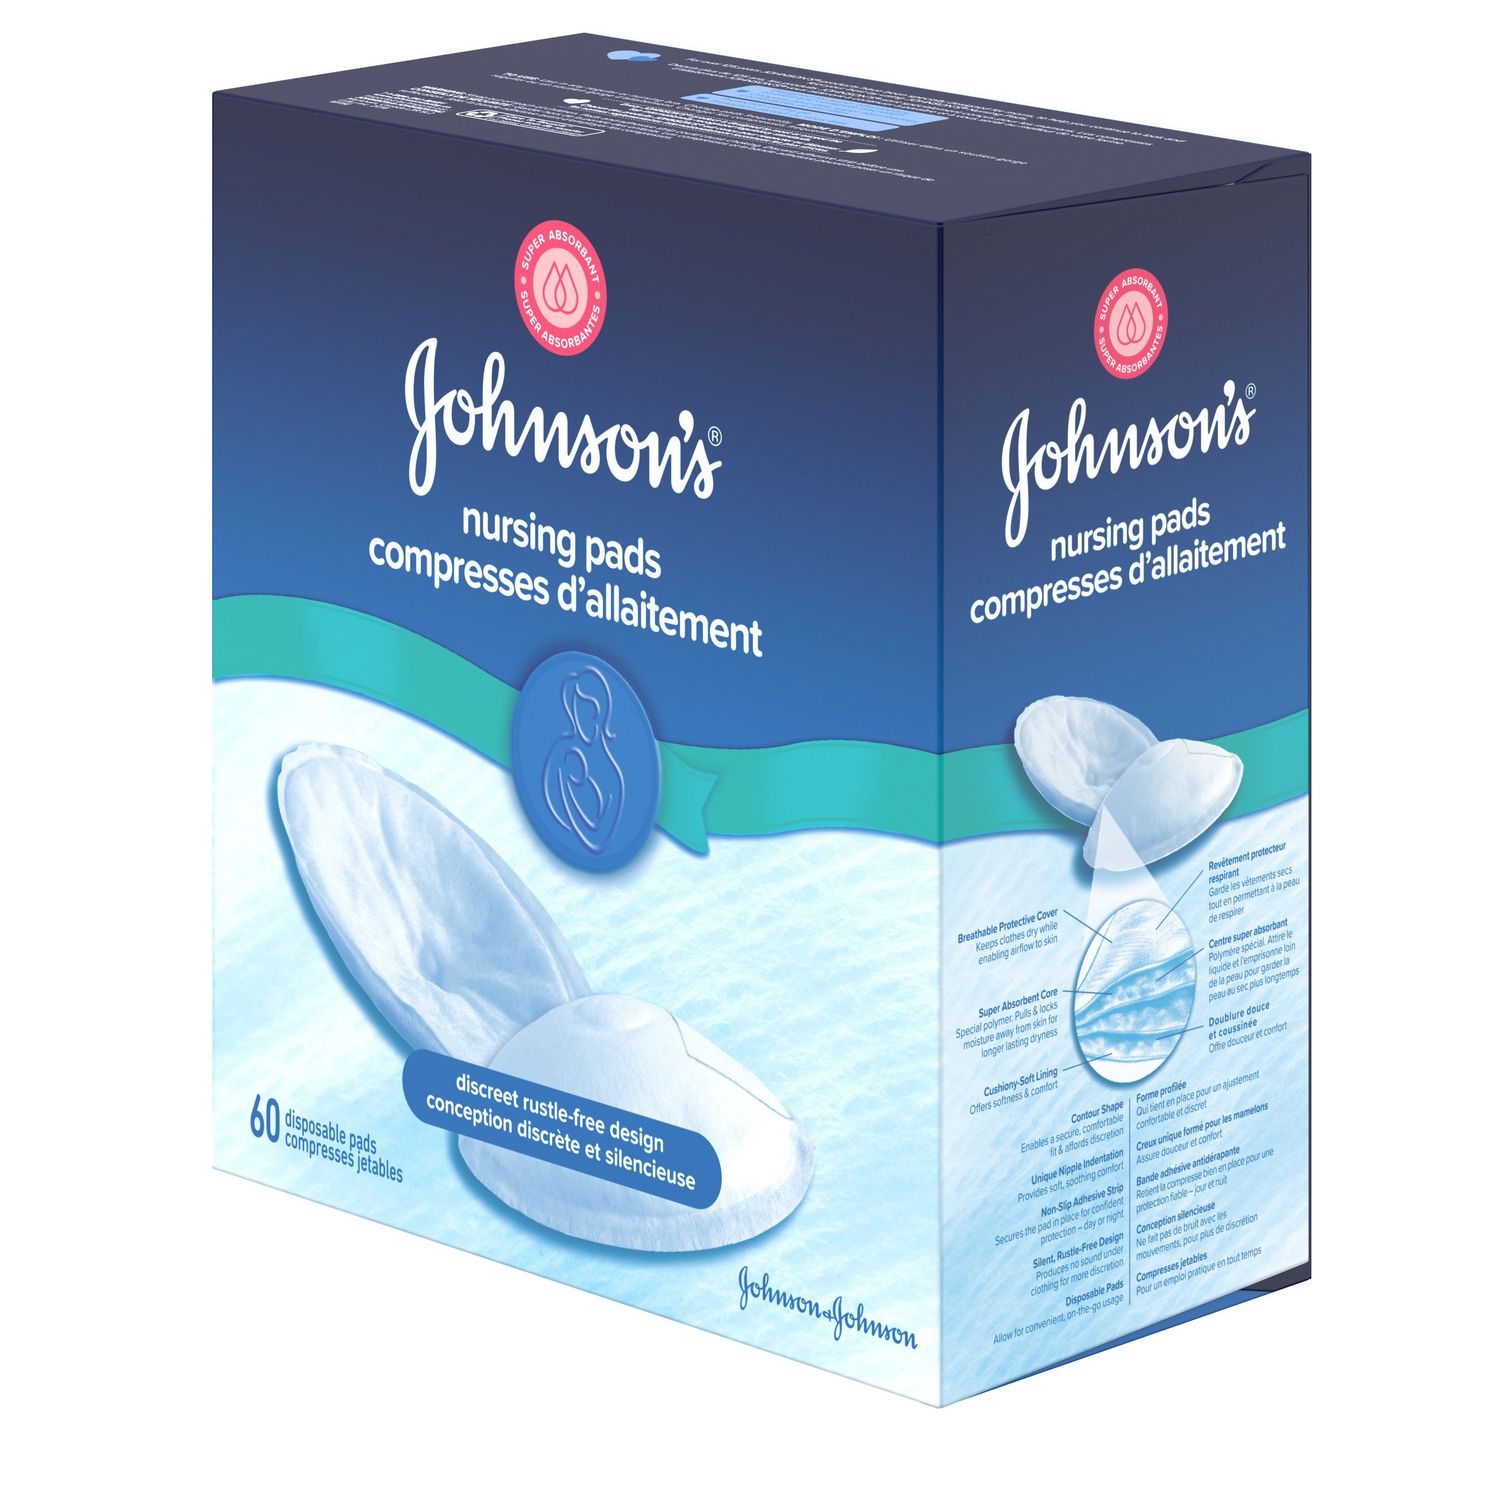 : Best nursing pads – Blue box of Johnson’s Nursing Pads